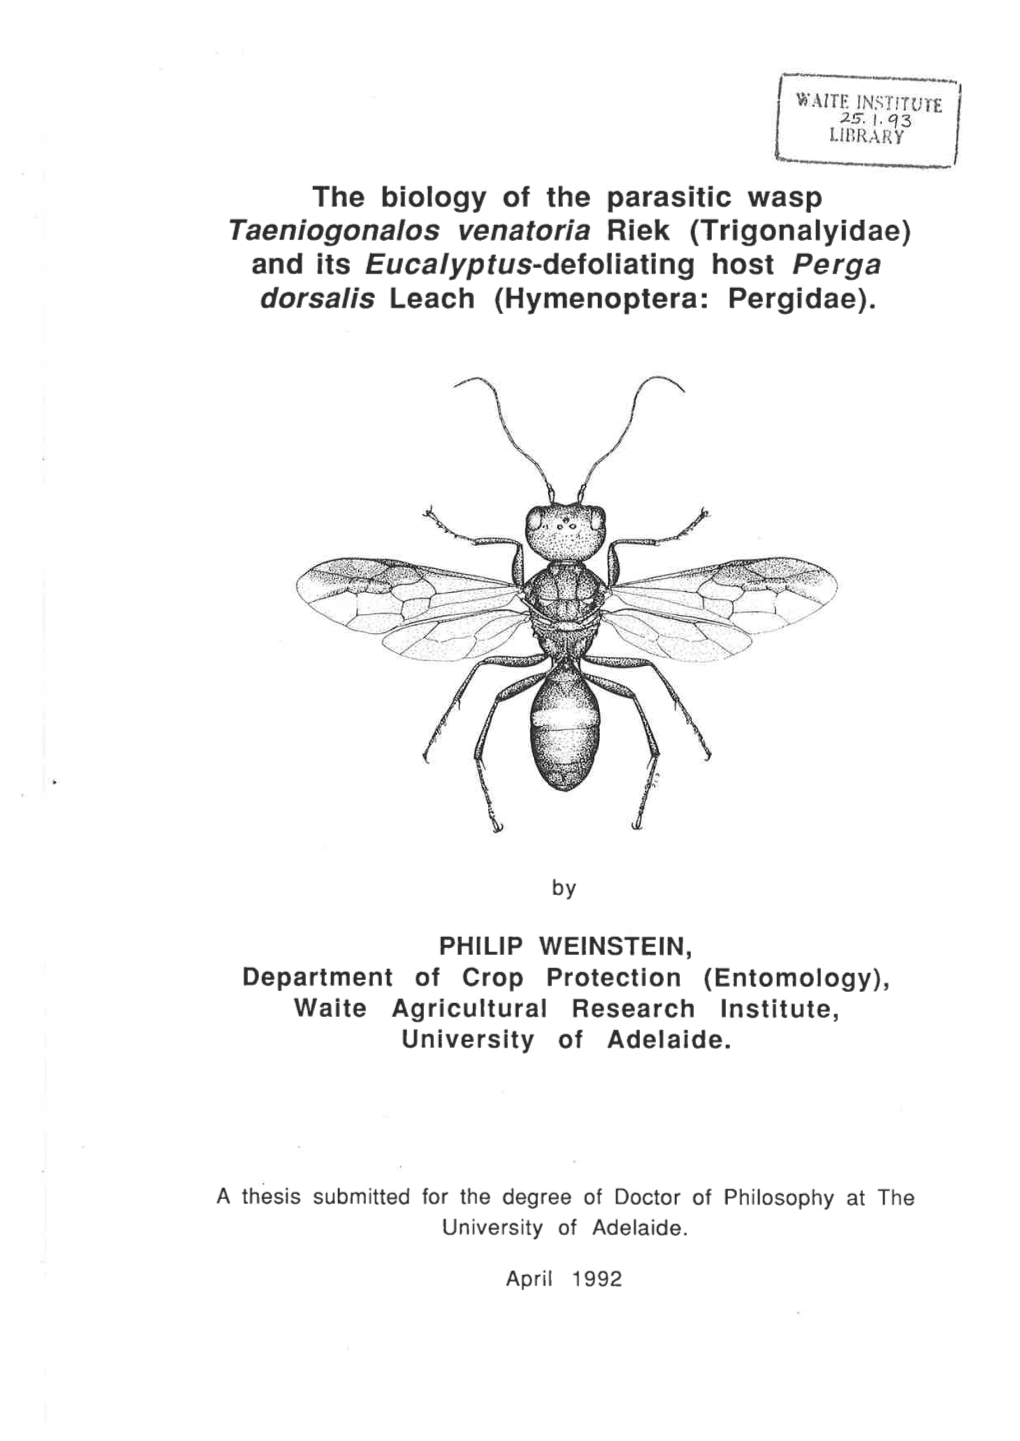 The Biology of the Parasitic Wasp Taeniogonalos Venatoria Riek (Trigonalyidae) and Its Eucalypfus-Defoliating Host Perga Dorsalis Leach (Hymenoptera: Pergidae)